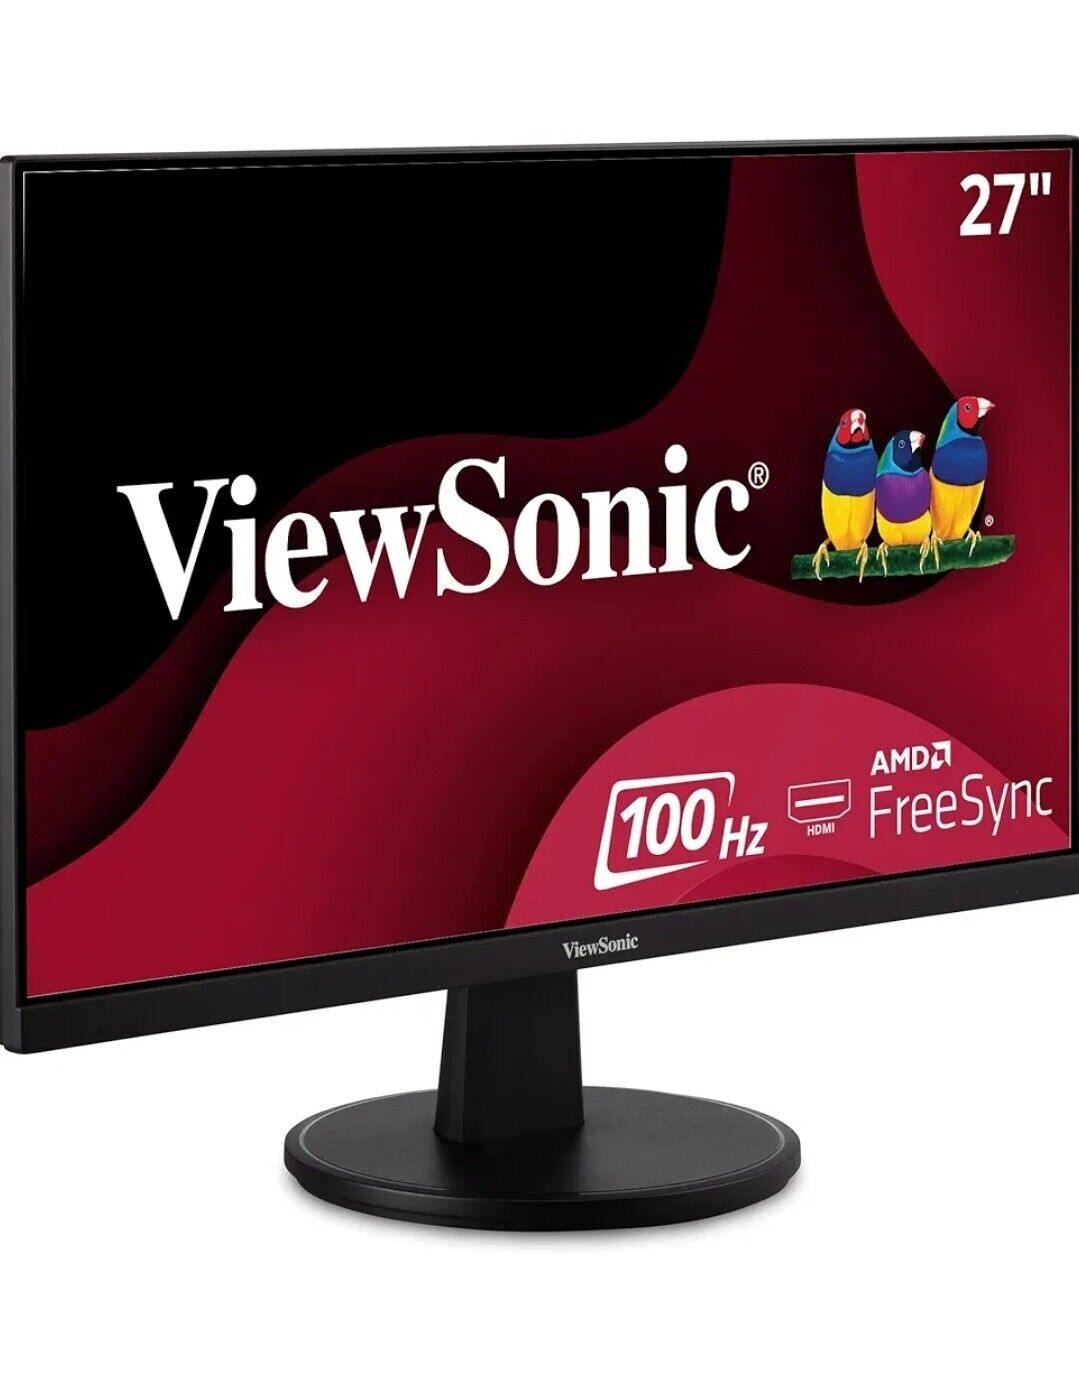 ViewSonic VA2747-MH 27 Inch Full HD 1080p Monitor with FreeSync, 100Hz, Ultra-Th